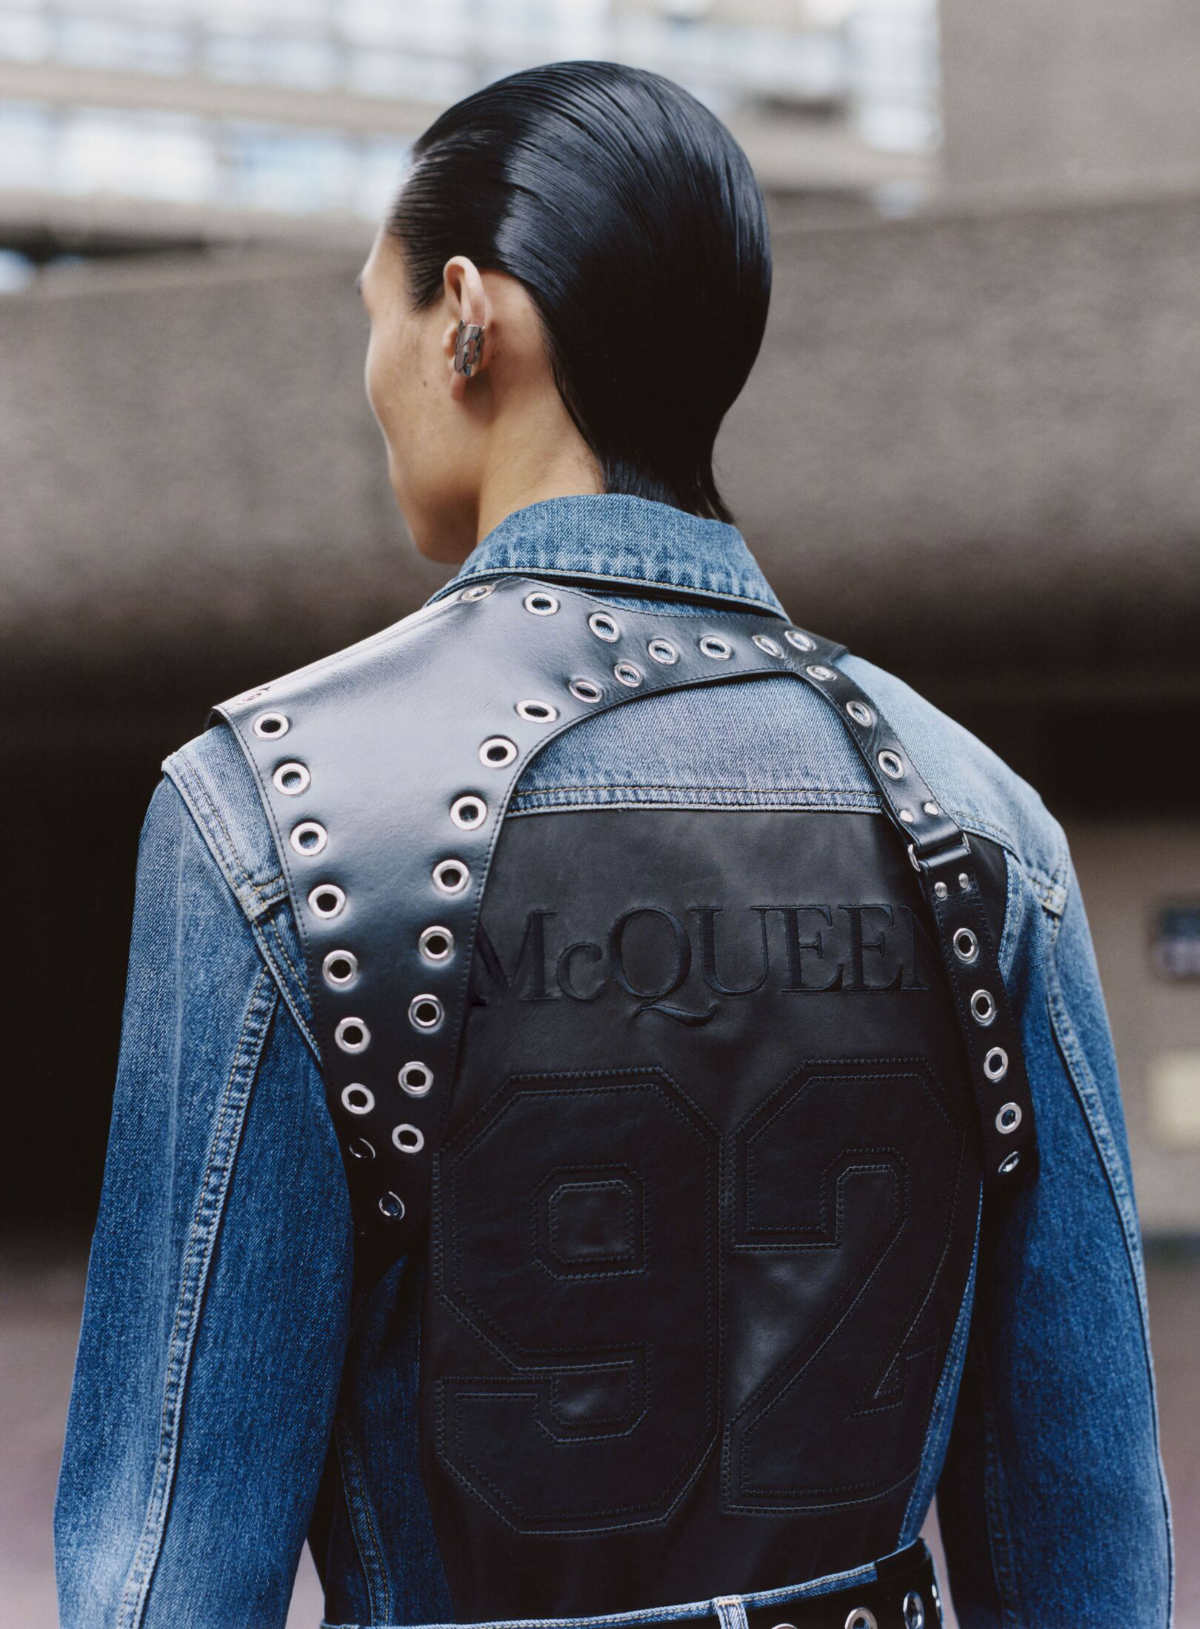 Alexander McQueen Presents Its New Pre-Spring/Summer 2023 Menswear Collection